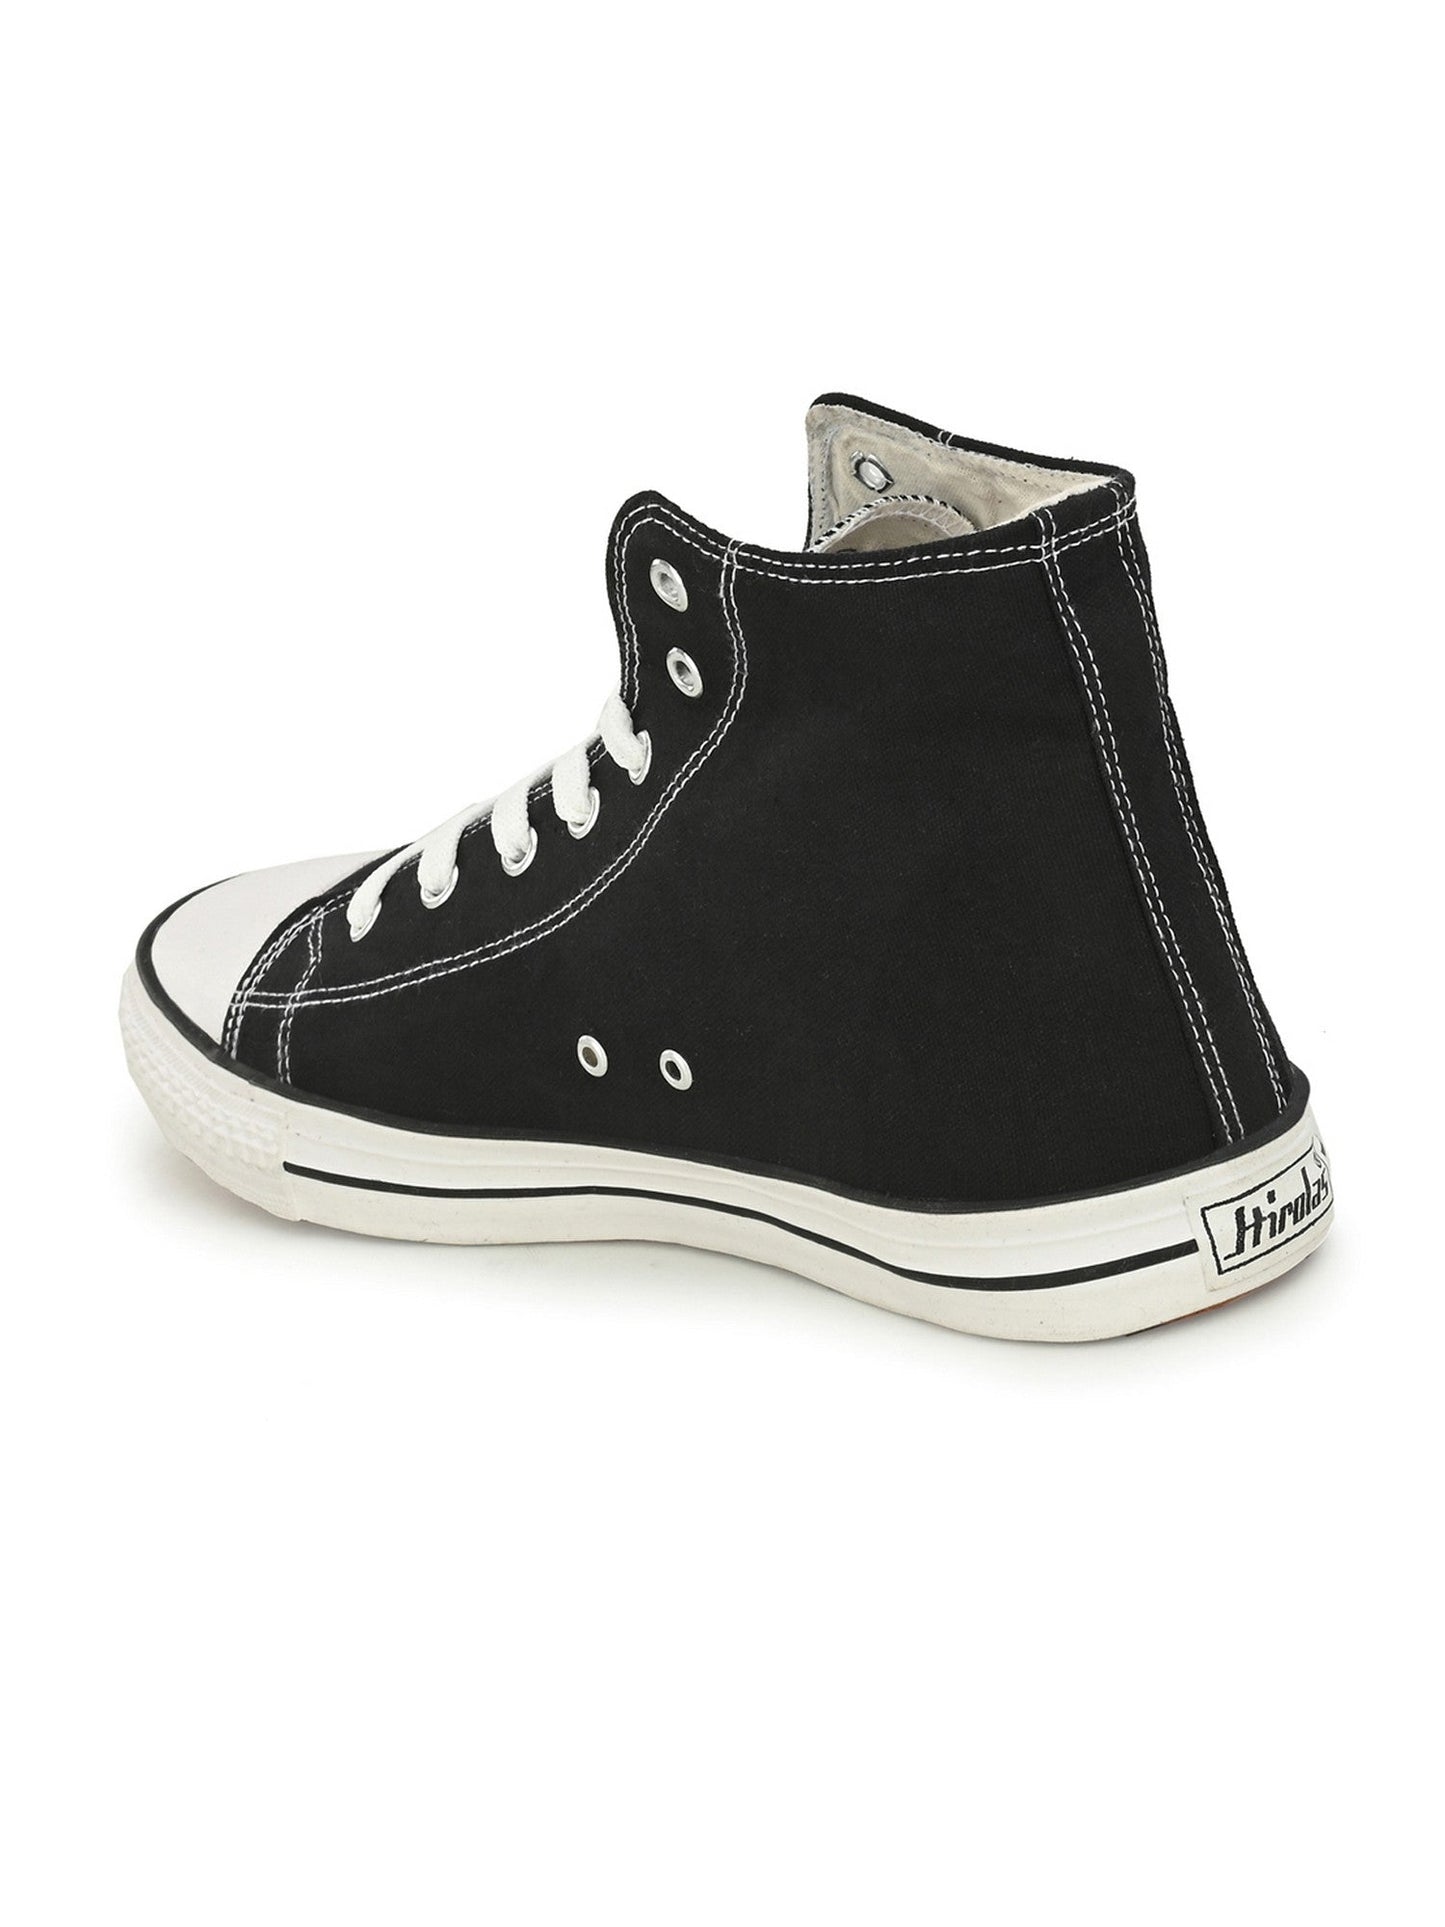 Hirolas® Men's Black Canvas Vulcansied Skateboard Lace Up Ankle Length Sneaker Shoes (HRL2077BLK)